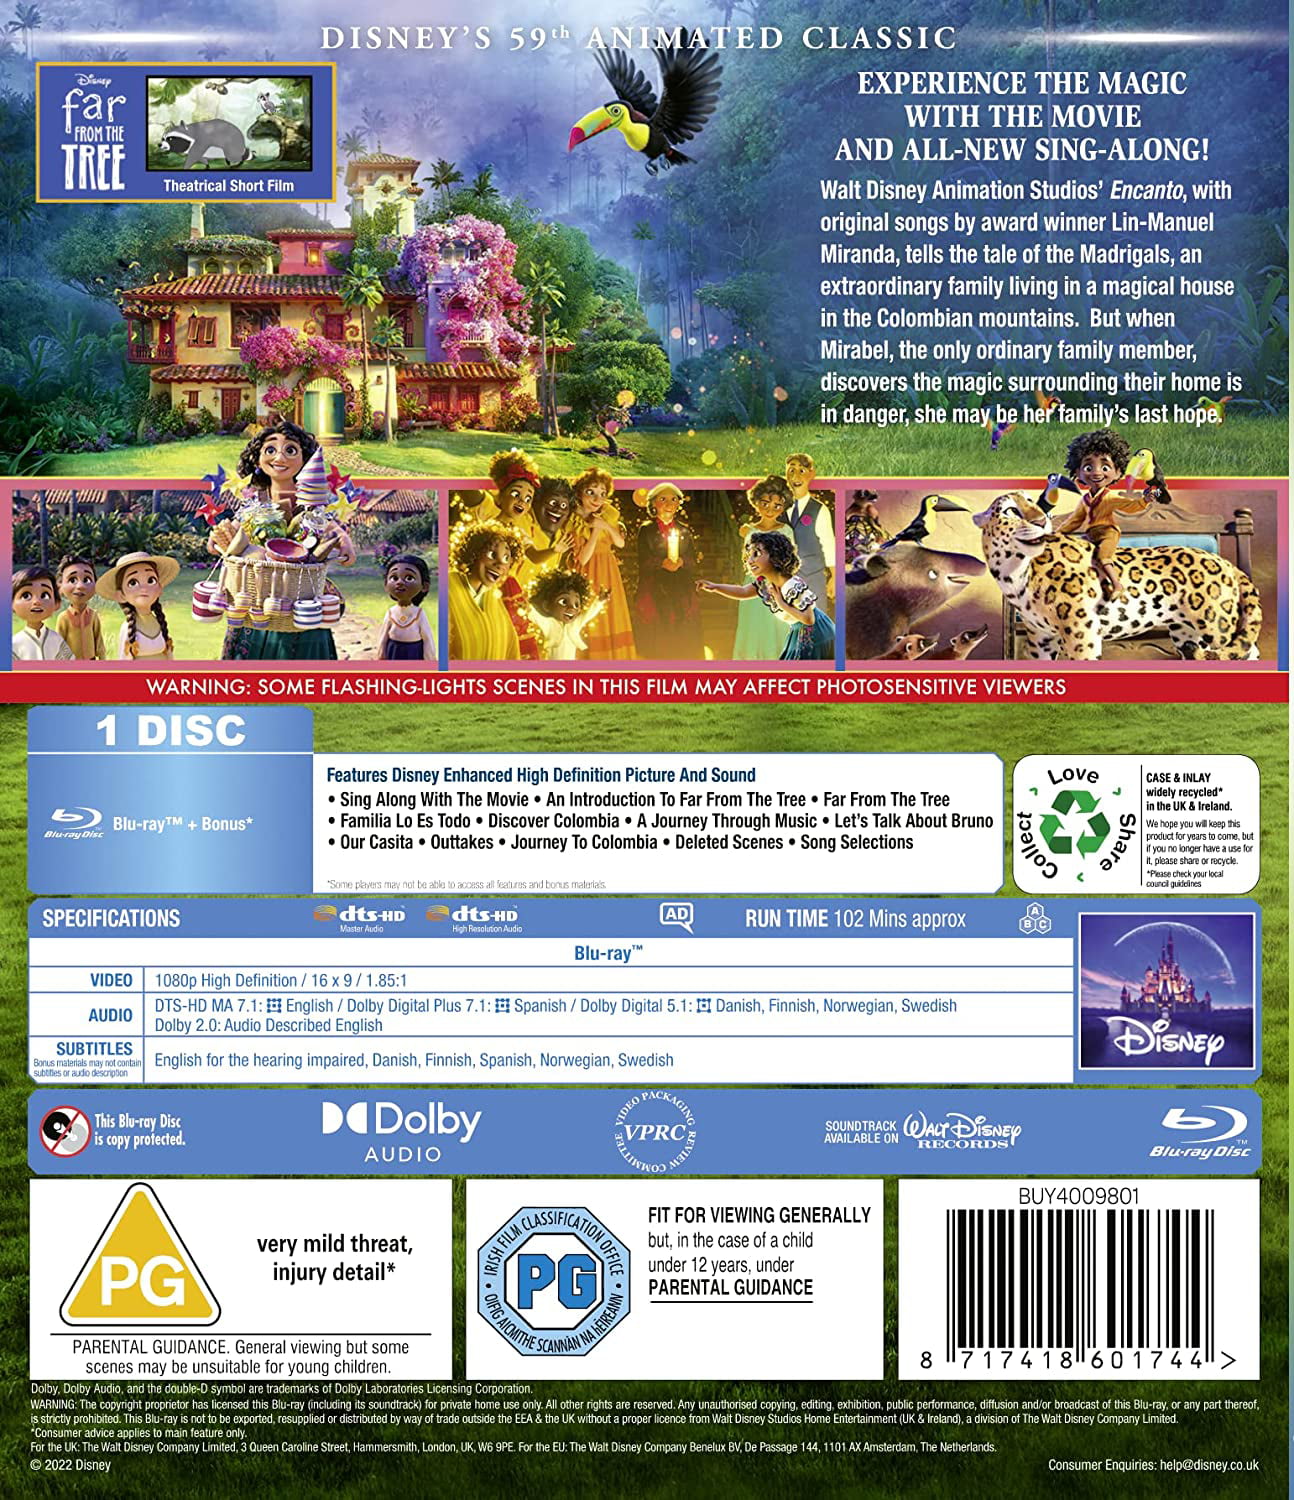 Encanto, la fantastique famille Madrigal - Disney+, DVD, Blu-Ray